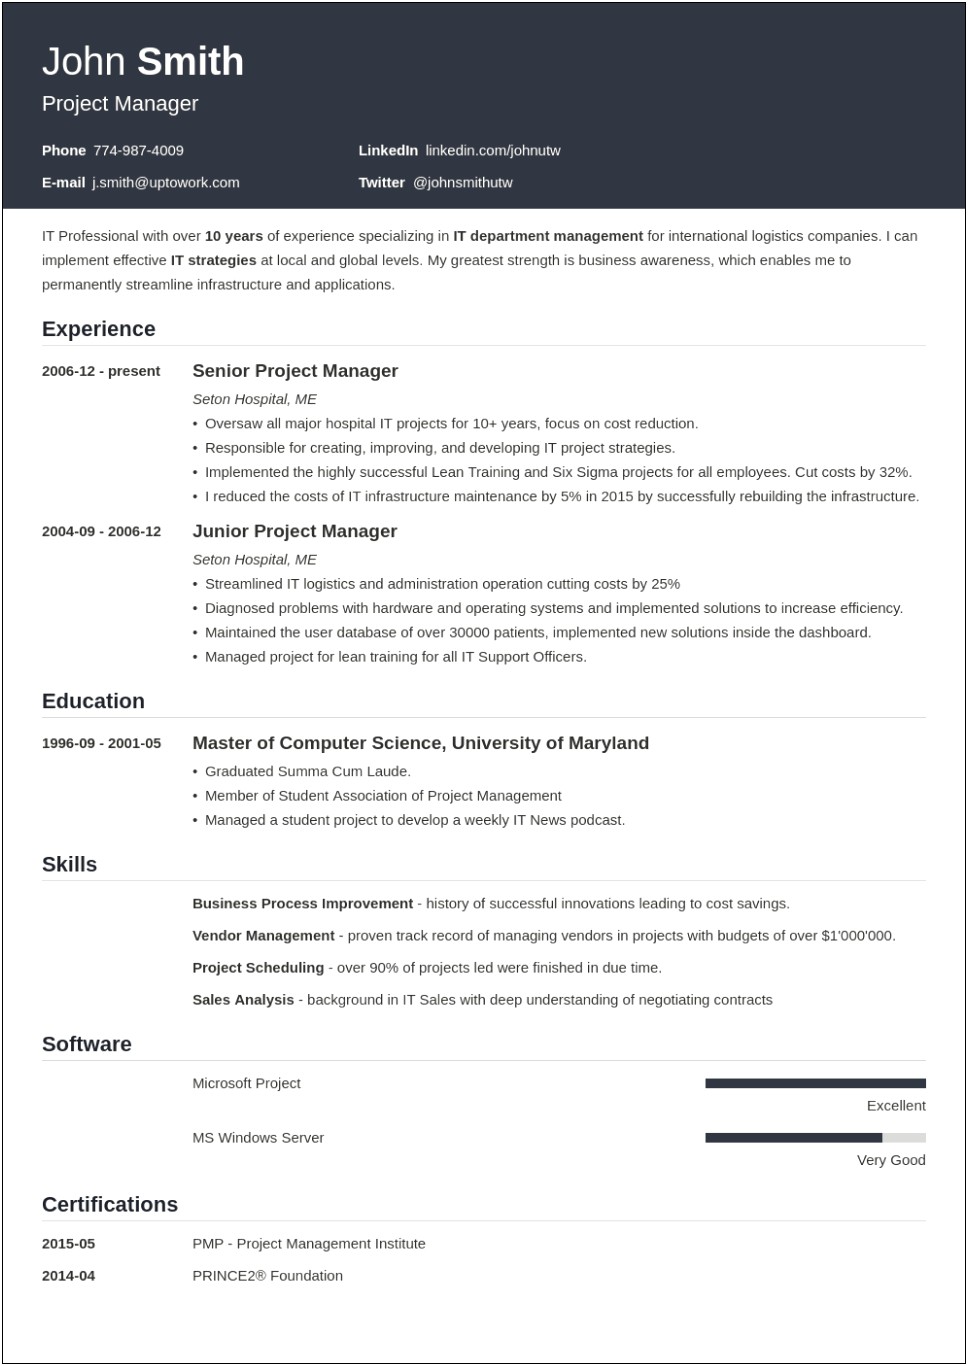 Best Resume Template On Resume.com